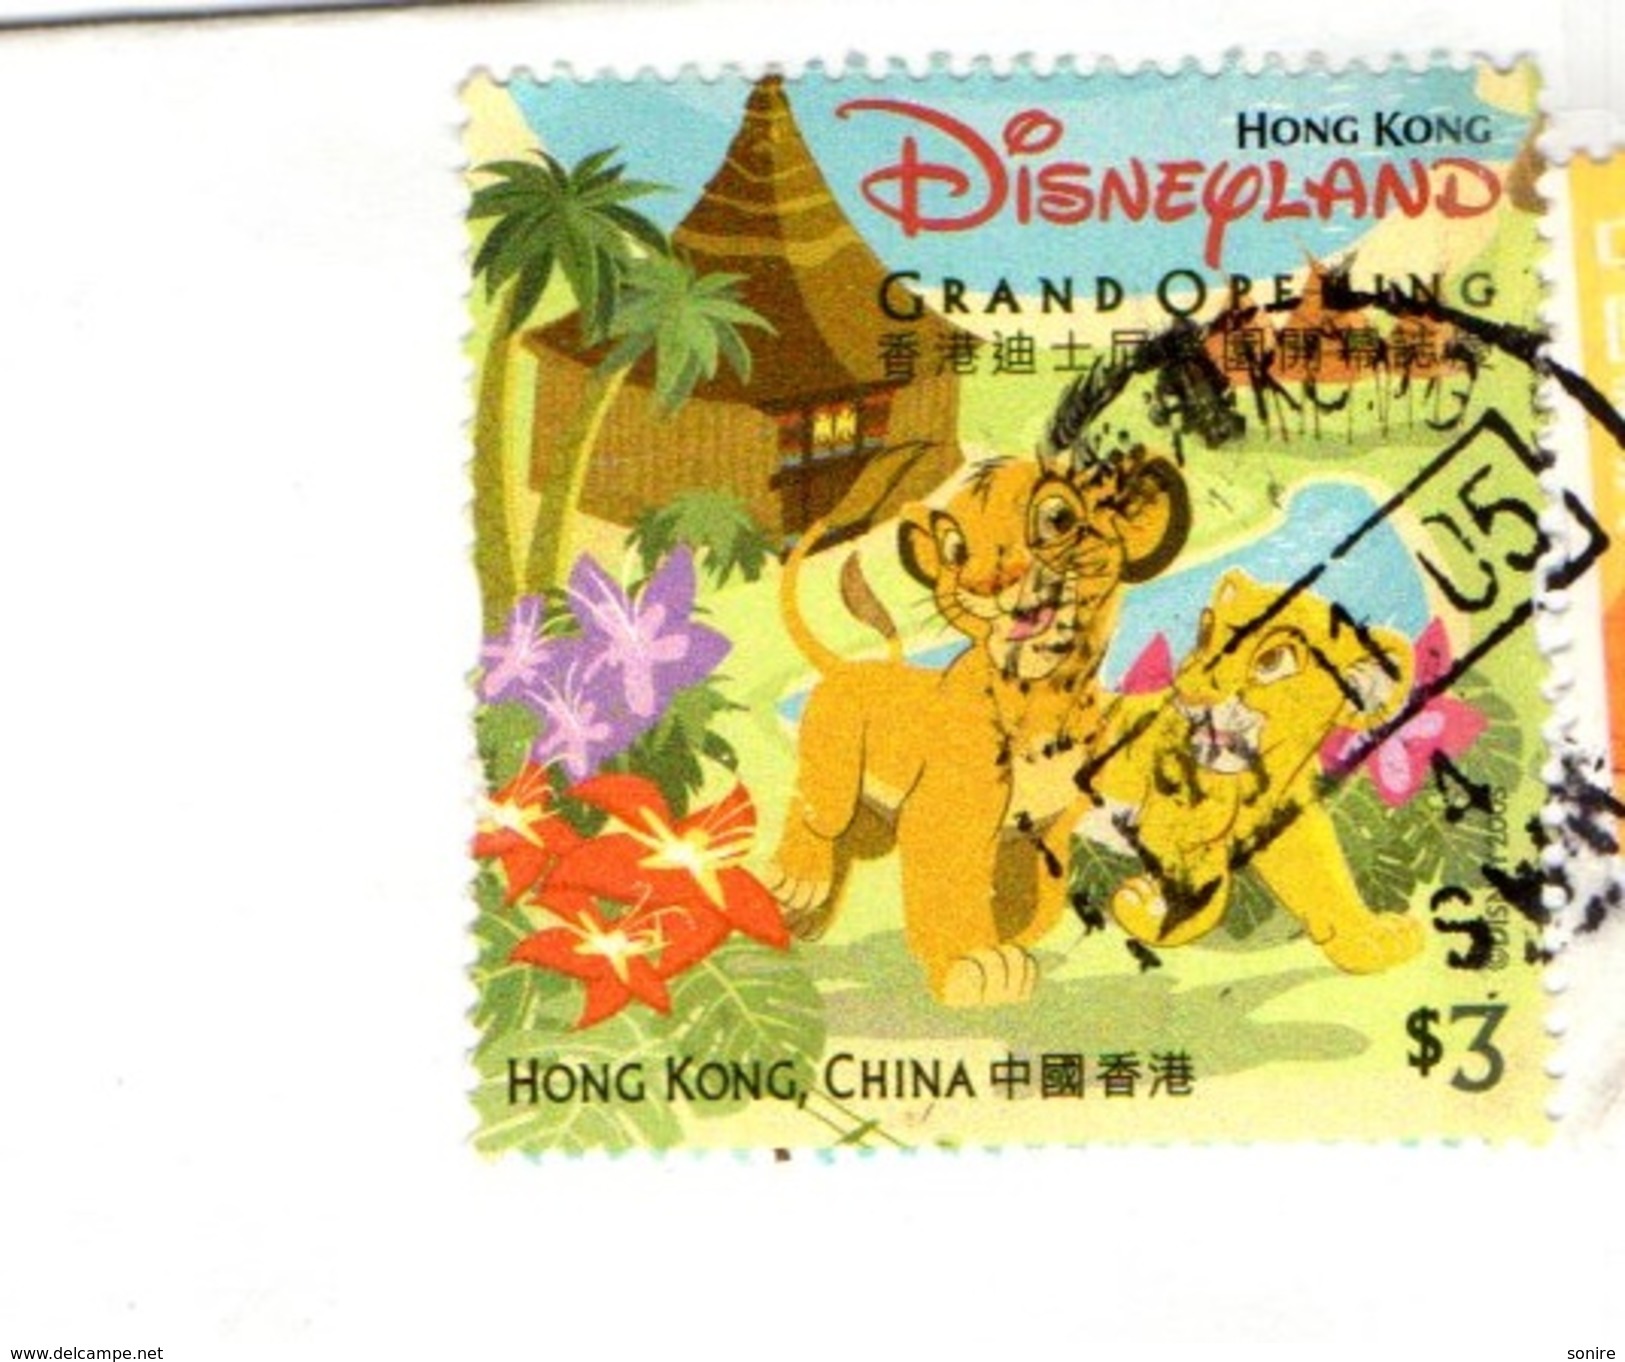 HONG KONG GRAND OPENING DISNEYLAND - F602 - Used Stamps